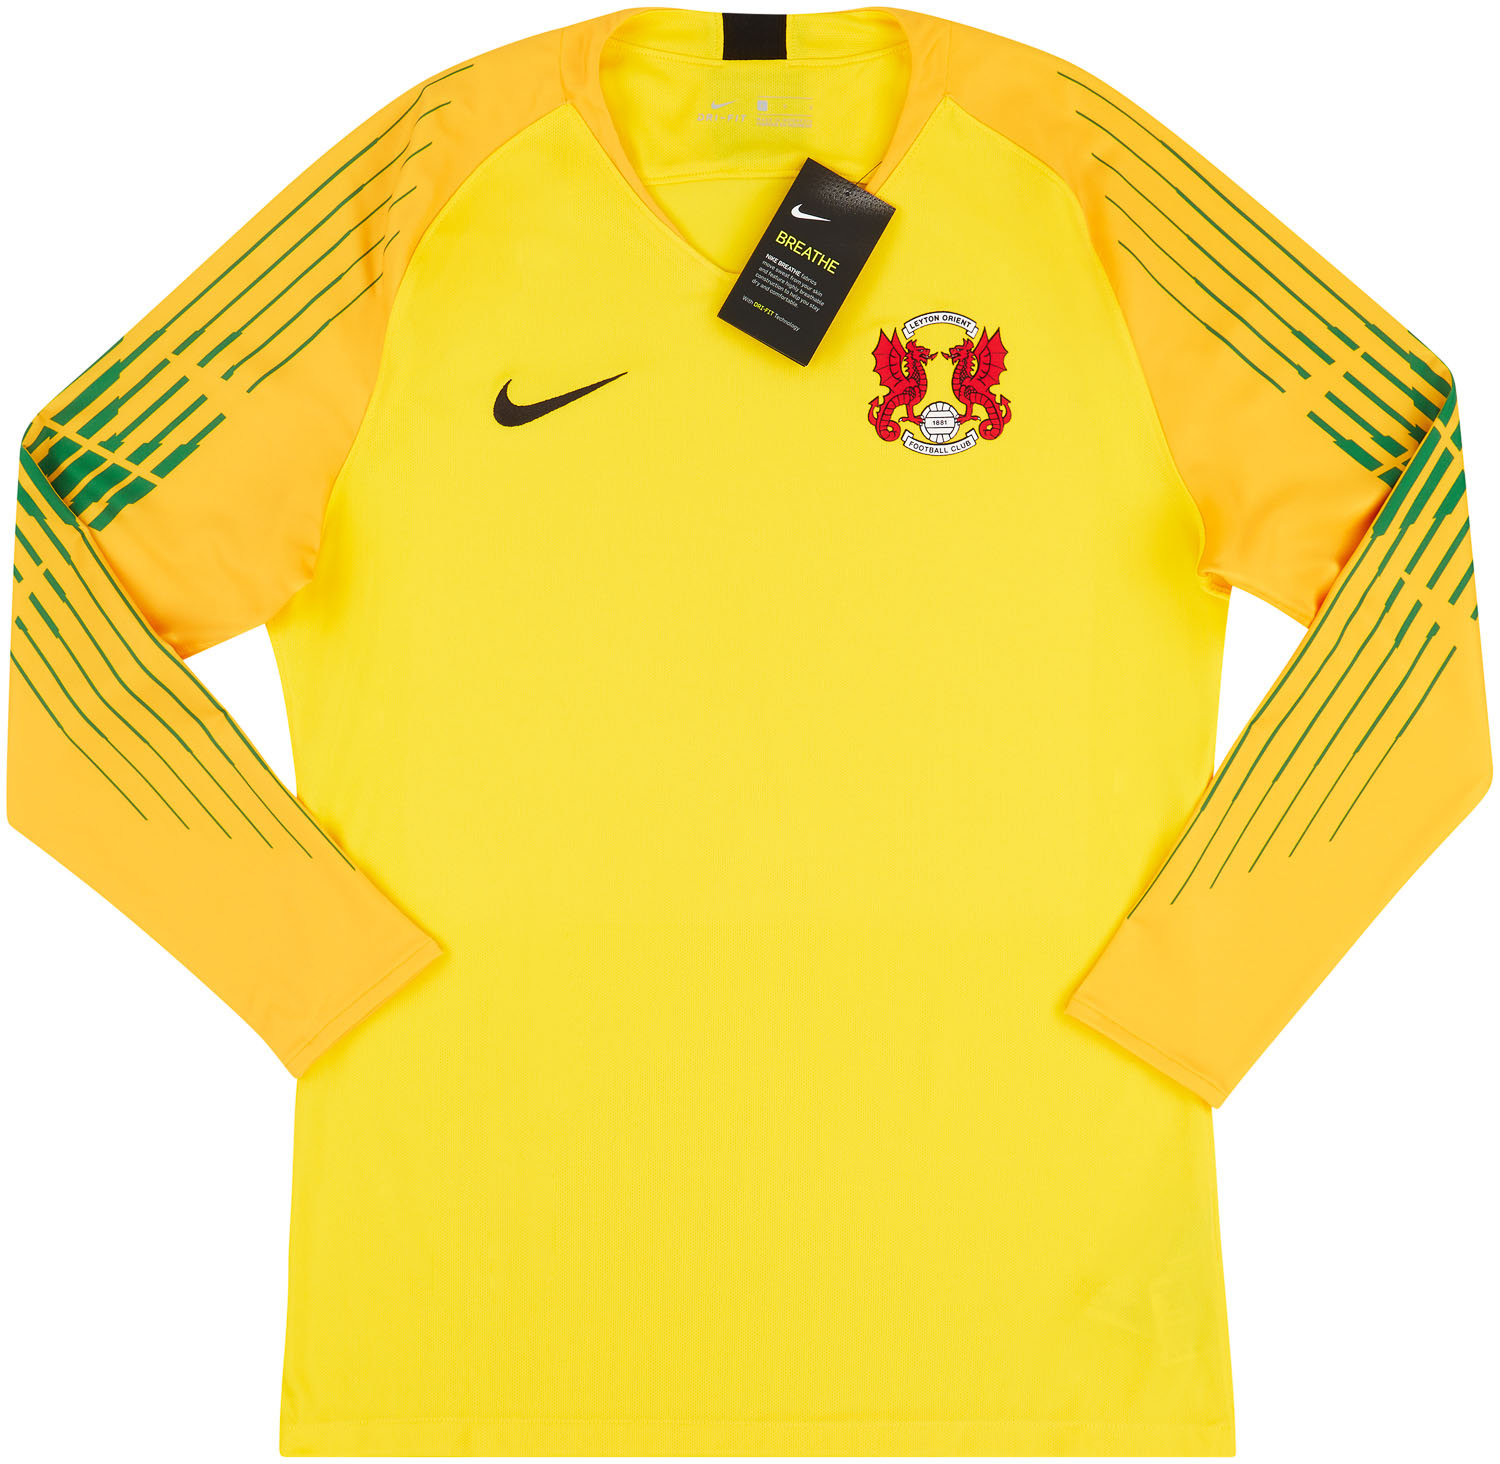 Leyton Orient  Goalkeeper shirt (Original)